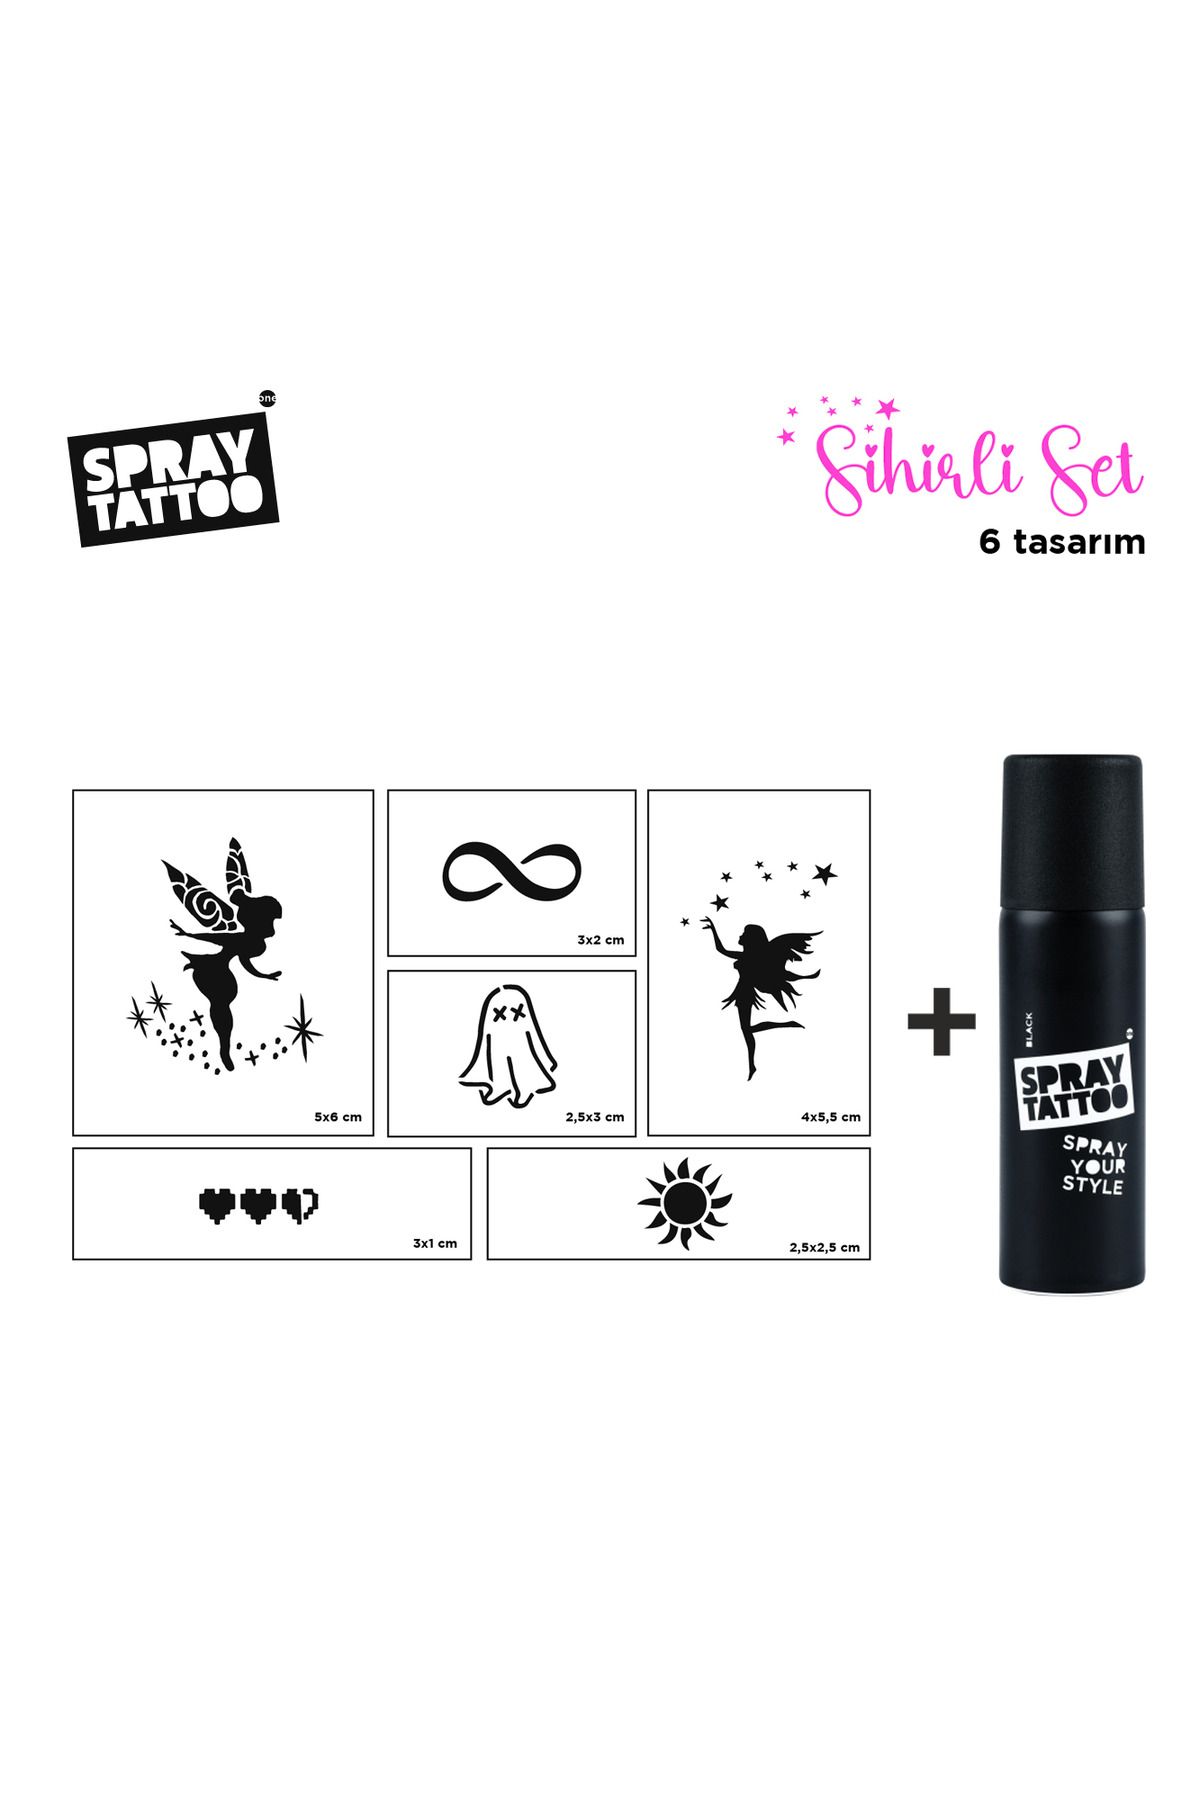 One Spray Tattoo Sihirli SET + Siyah Sprey